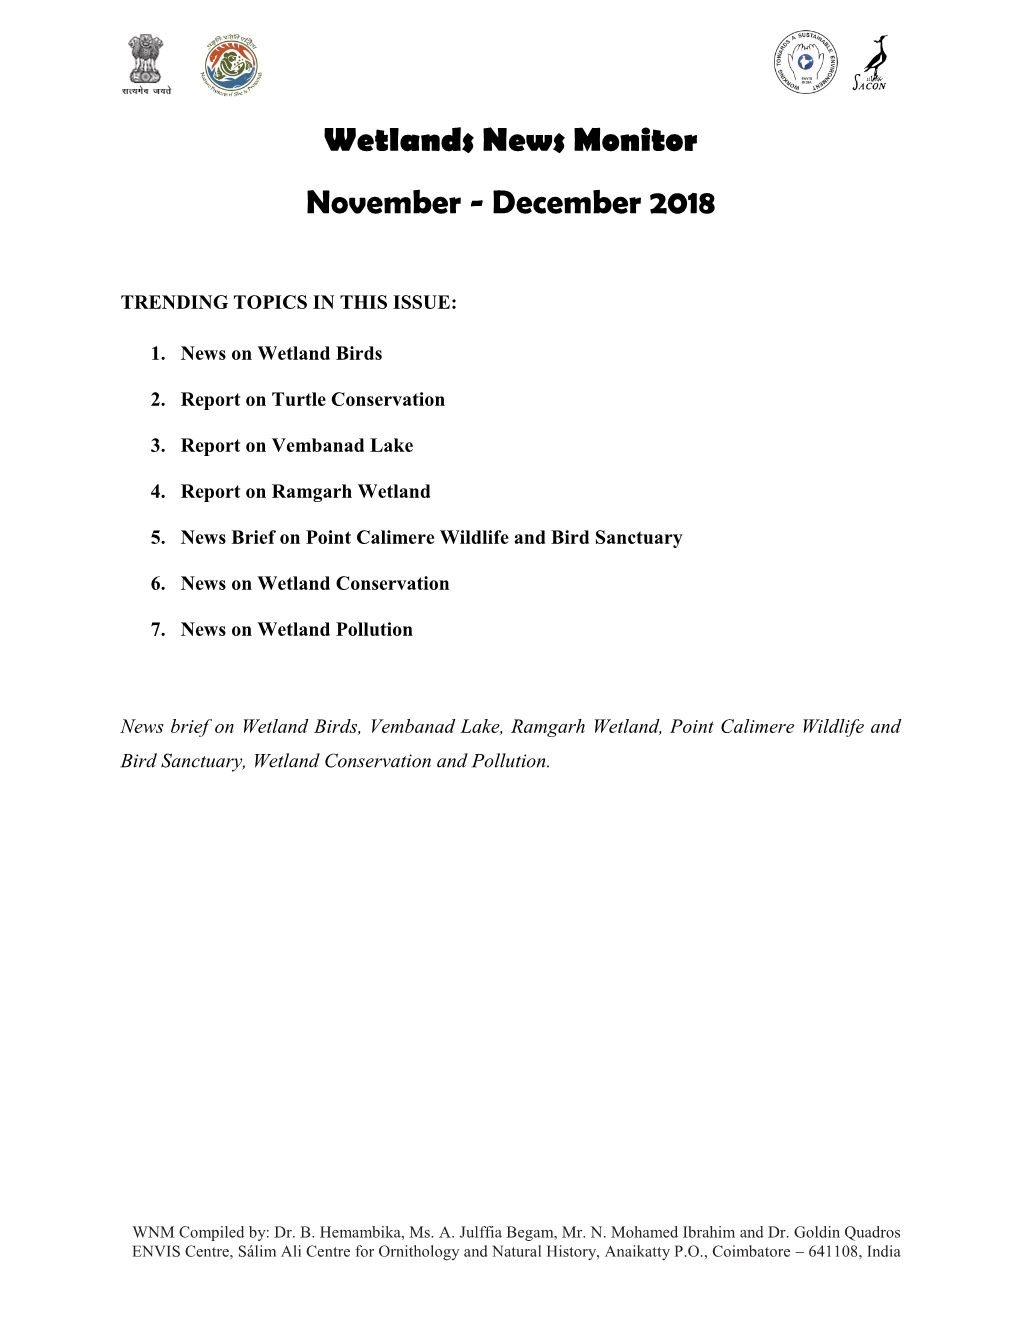 Wetlands News Monitor November - December 2018